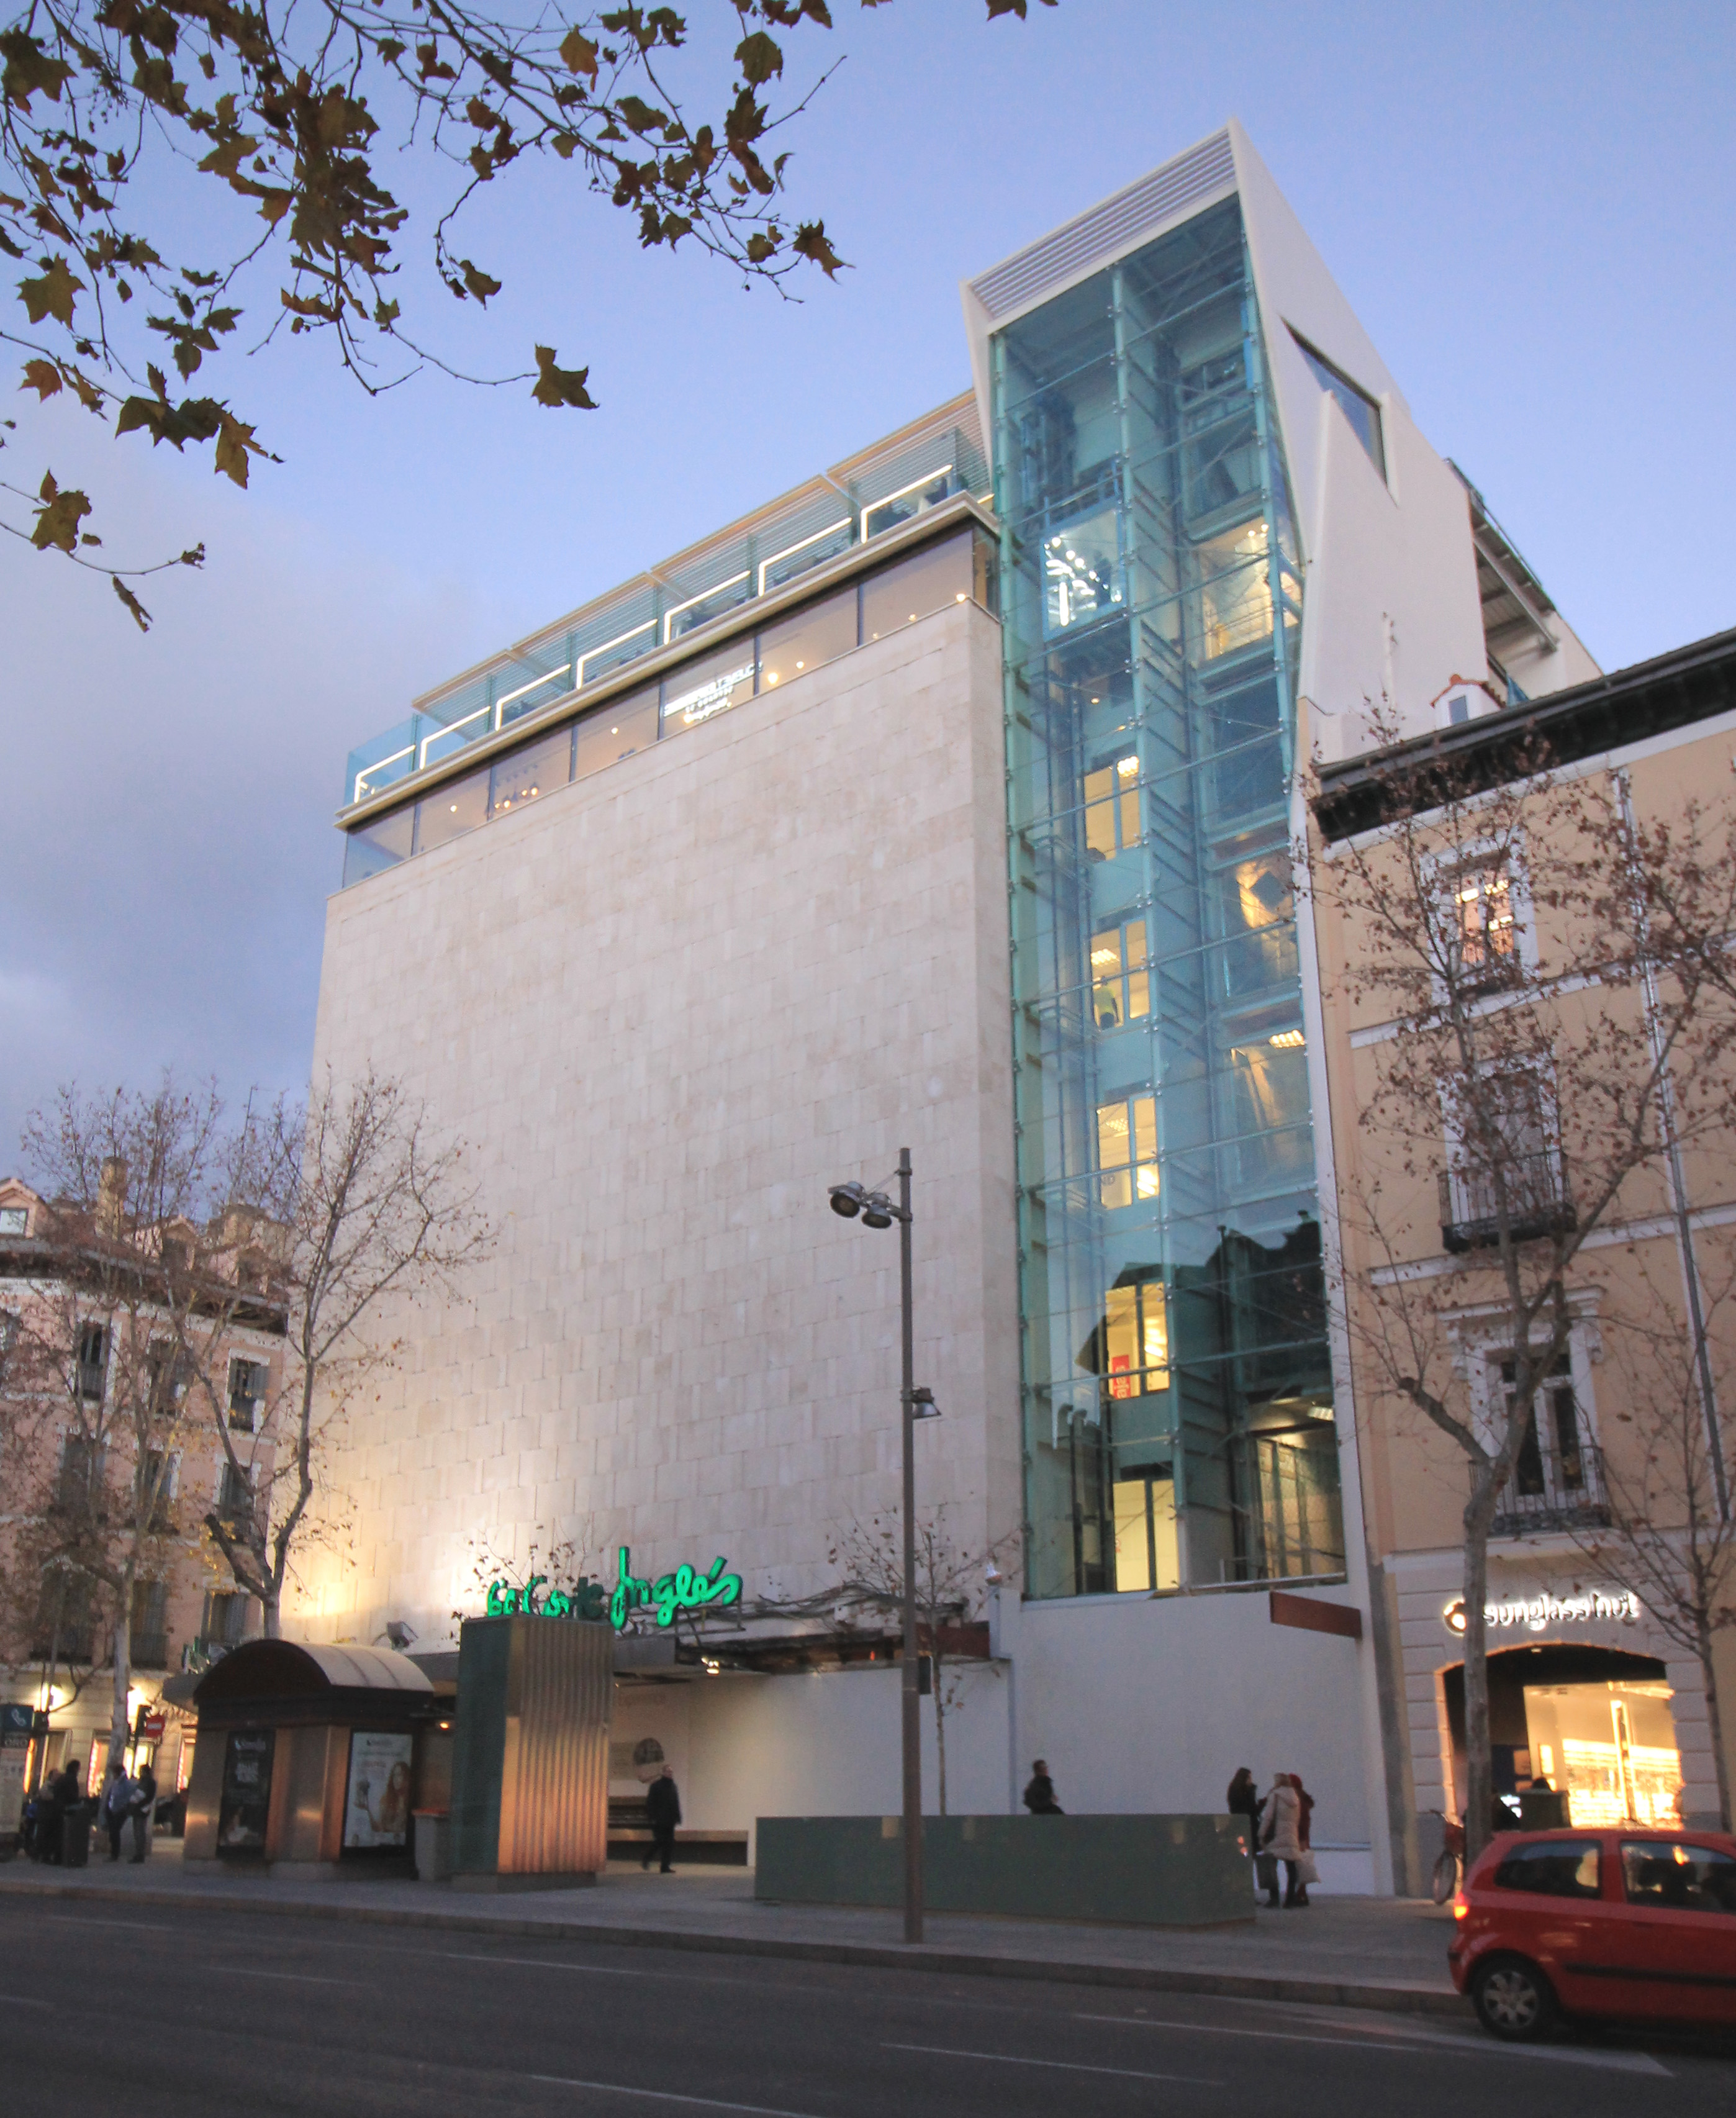 Calle de Serrano - Madrid Film Office